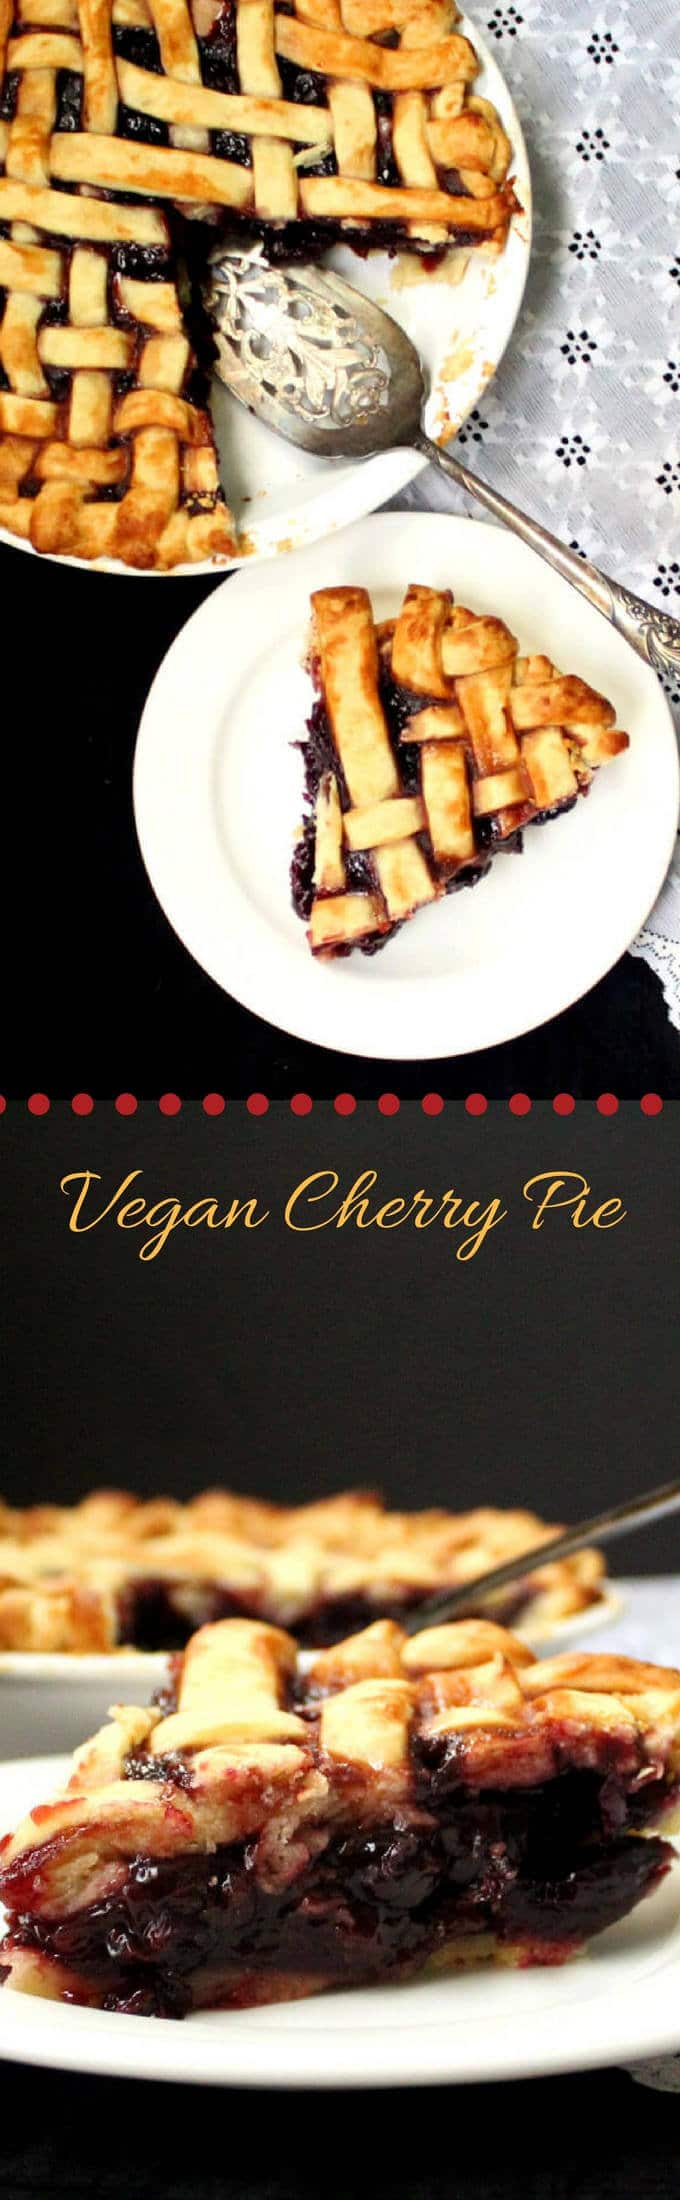 Vegan Cherry Pie - holycowvegan.net